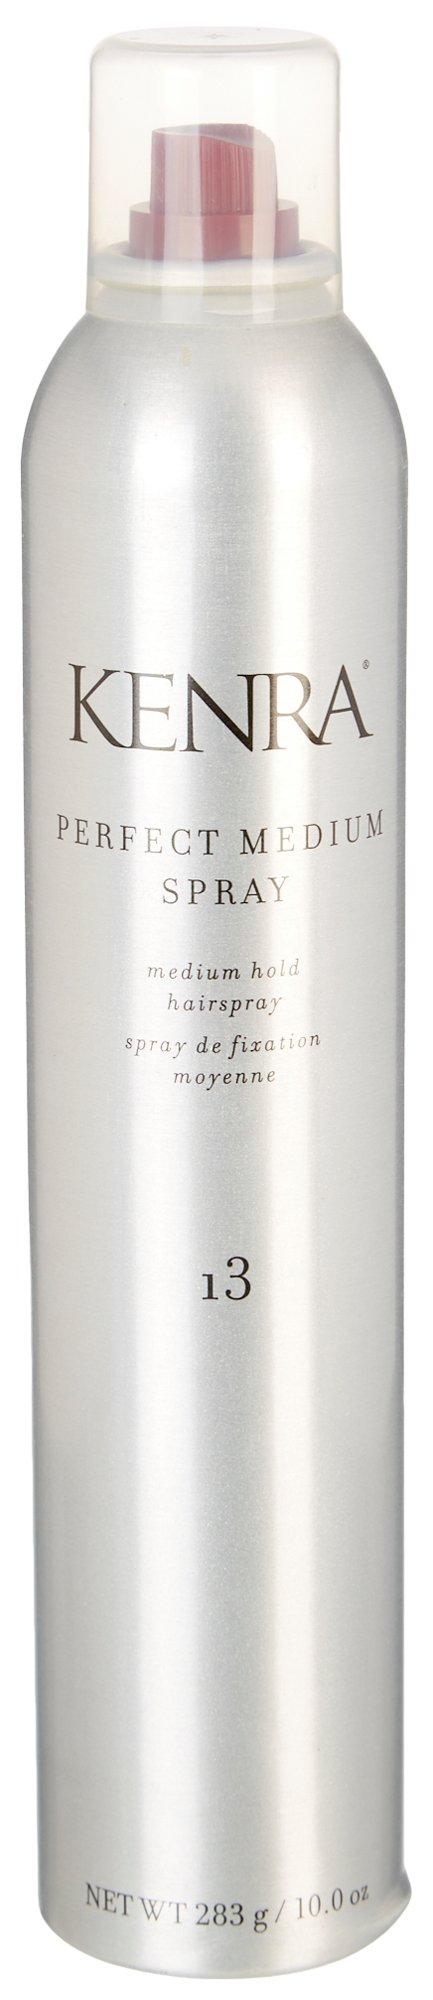 Perfect Medium Hold 13 Hair Spray 10 oz.